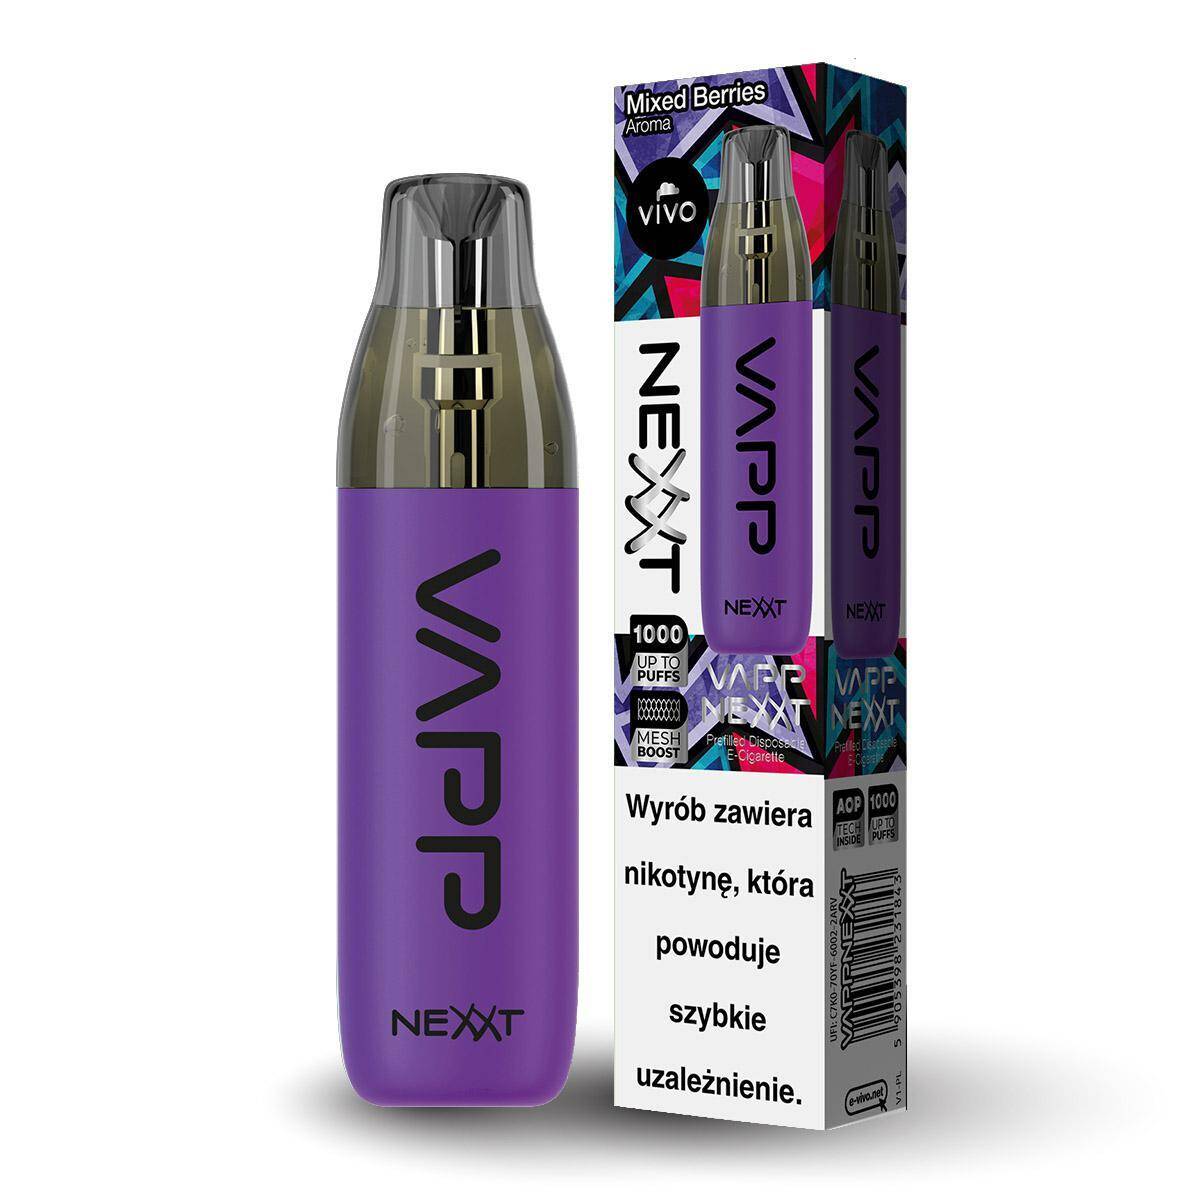 Disposable e-cigarette VIVO Nexxt - Mixed Berries 20mg